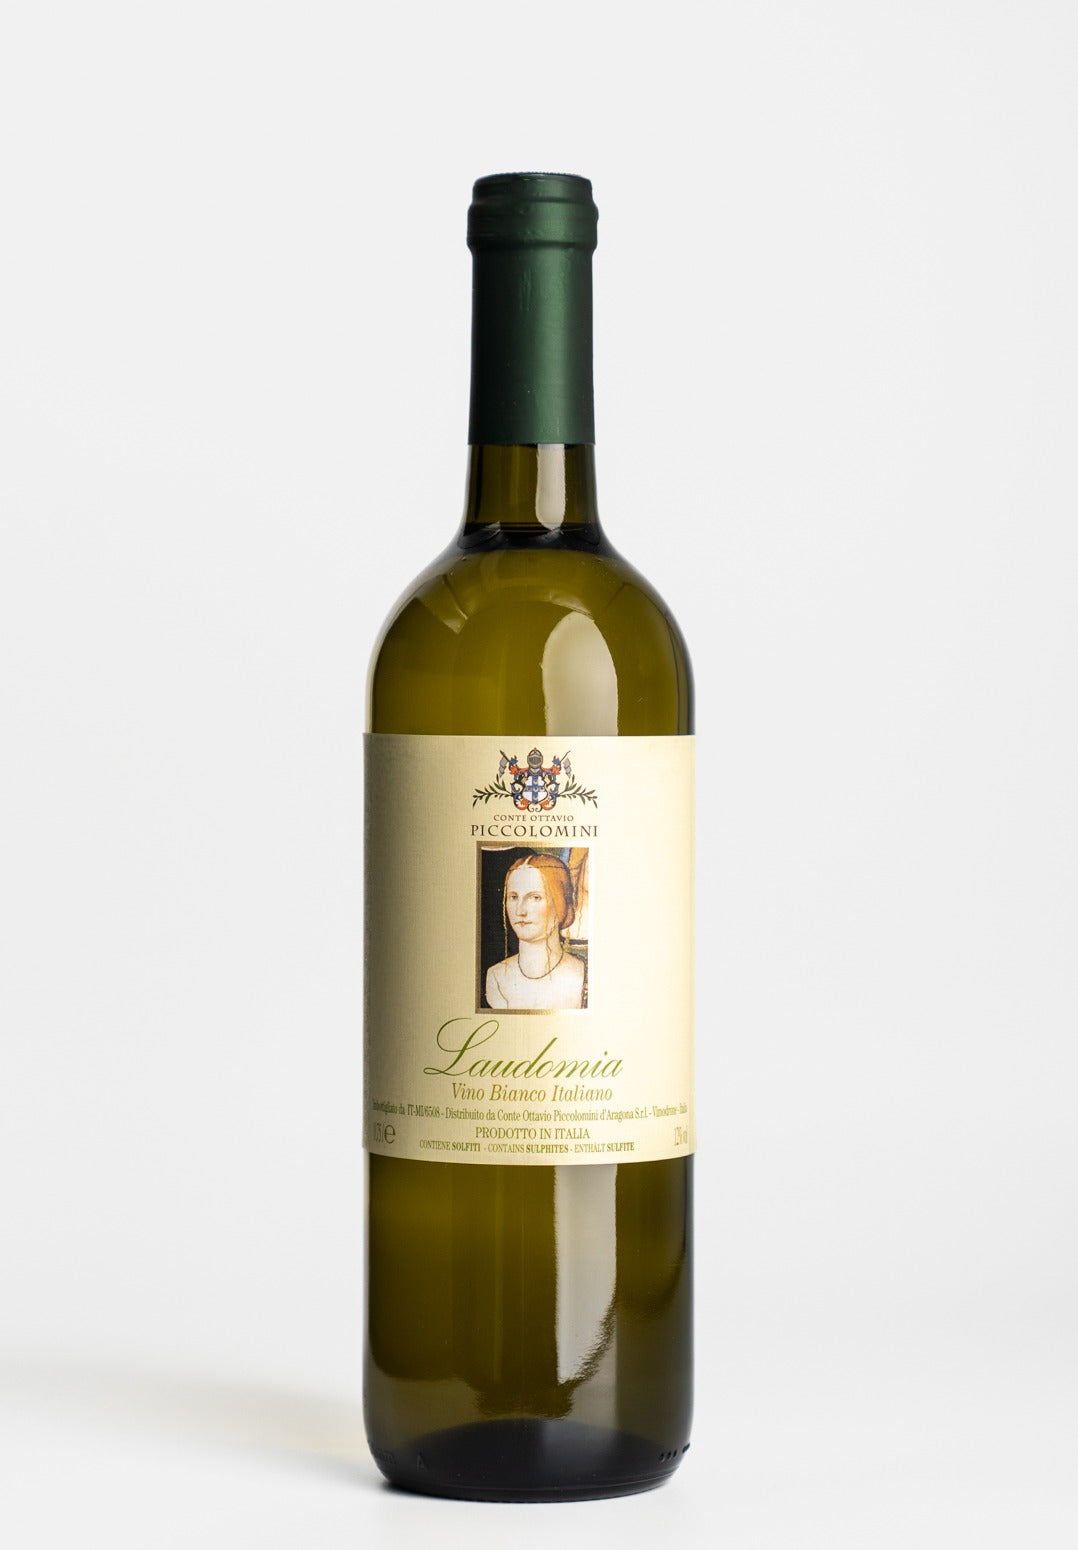 "LAUDOMIA" Vino Bianco Italiano